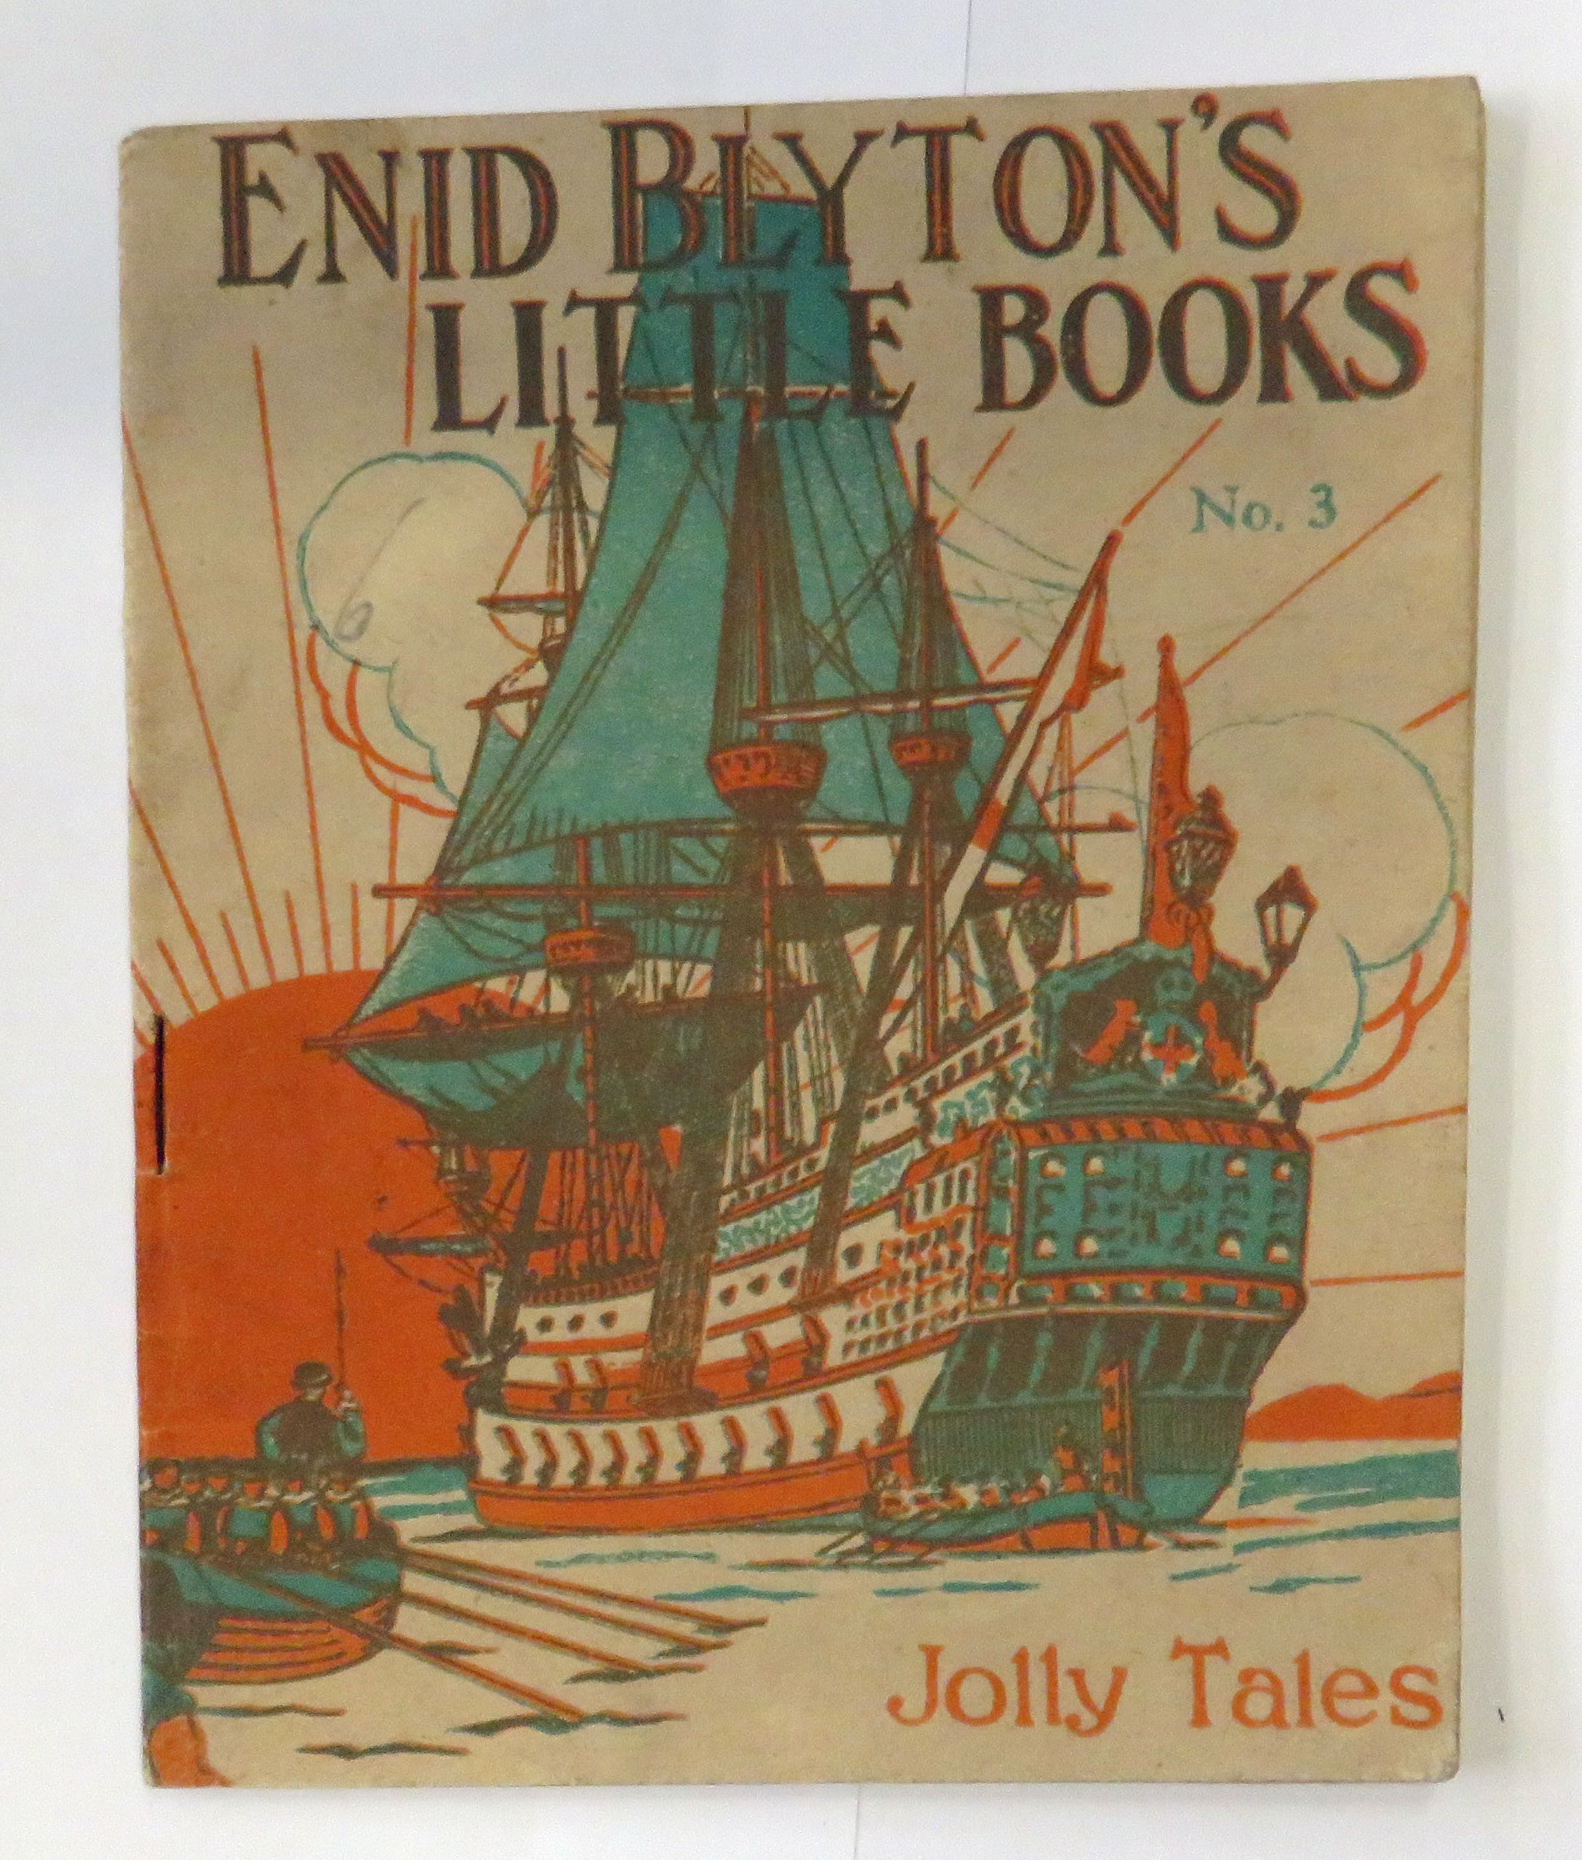 Enid Blyton's Little Books No. 3 Jolly Tales